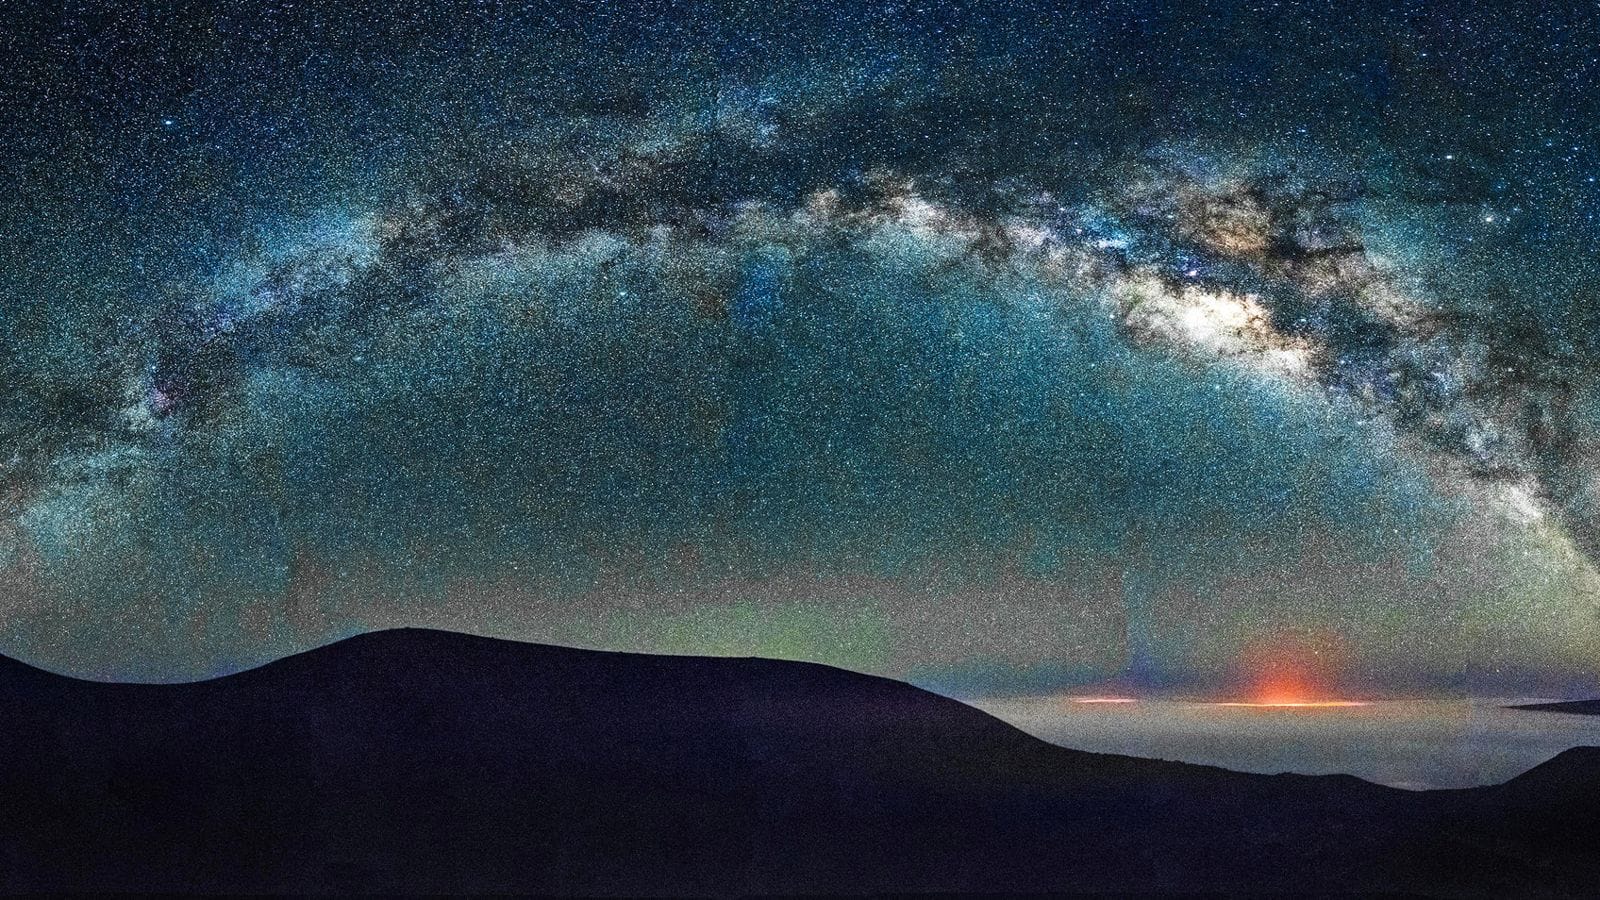 Go for a stargazing adventure in Mauna Kea, Hawaii